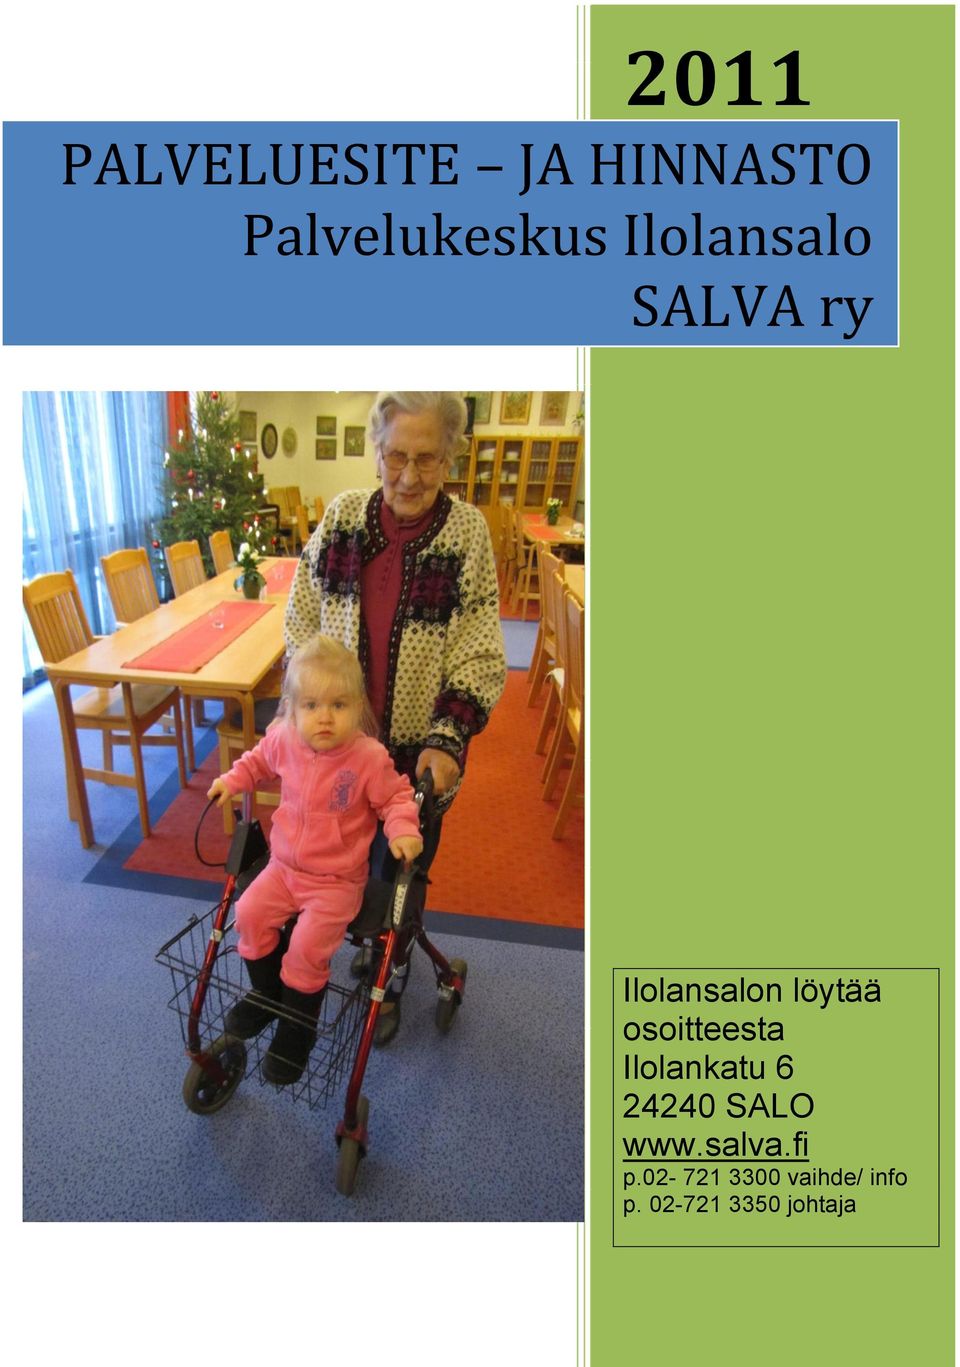 osoitteesta Ilolankatu 6 24240 SALO www.salva.